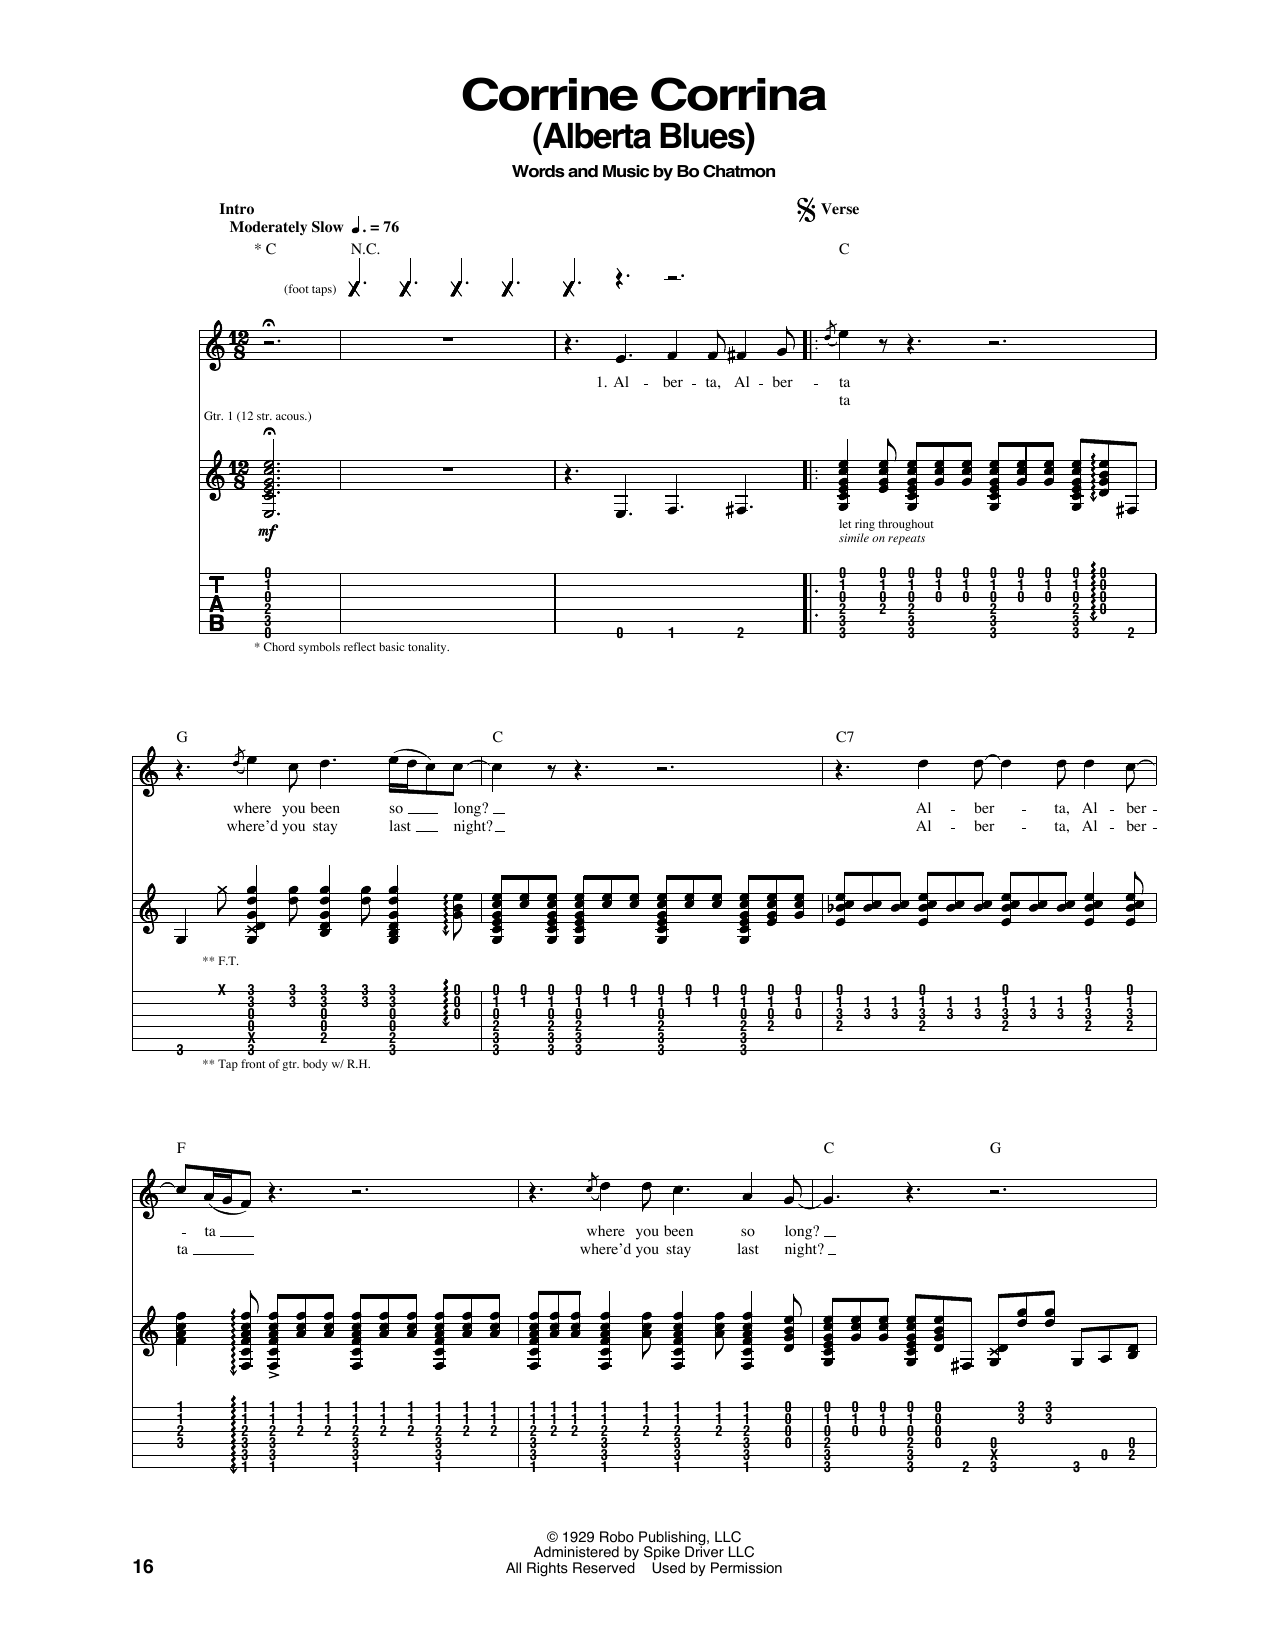 Eric Clapton Alberta Sheet Music Notes & Chords for Guitar Tab - Download or Print PDF